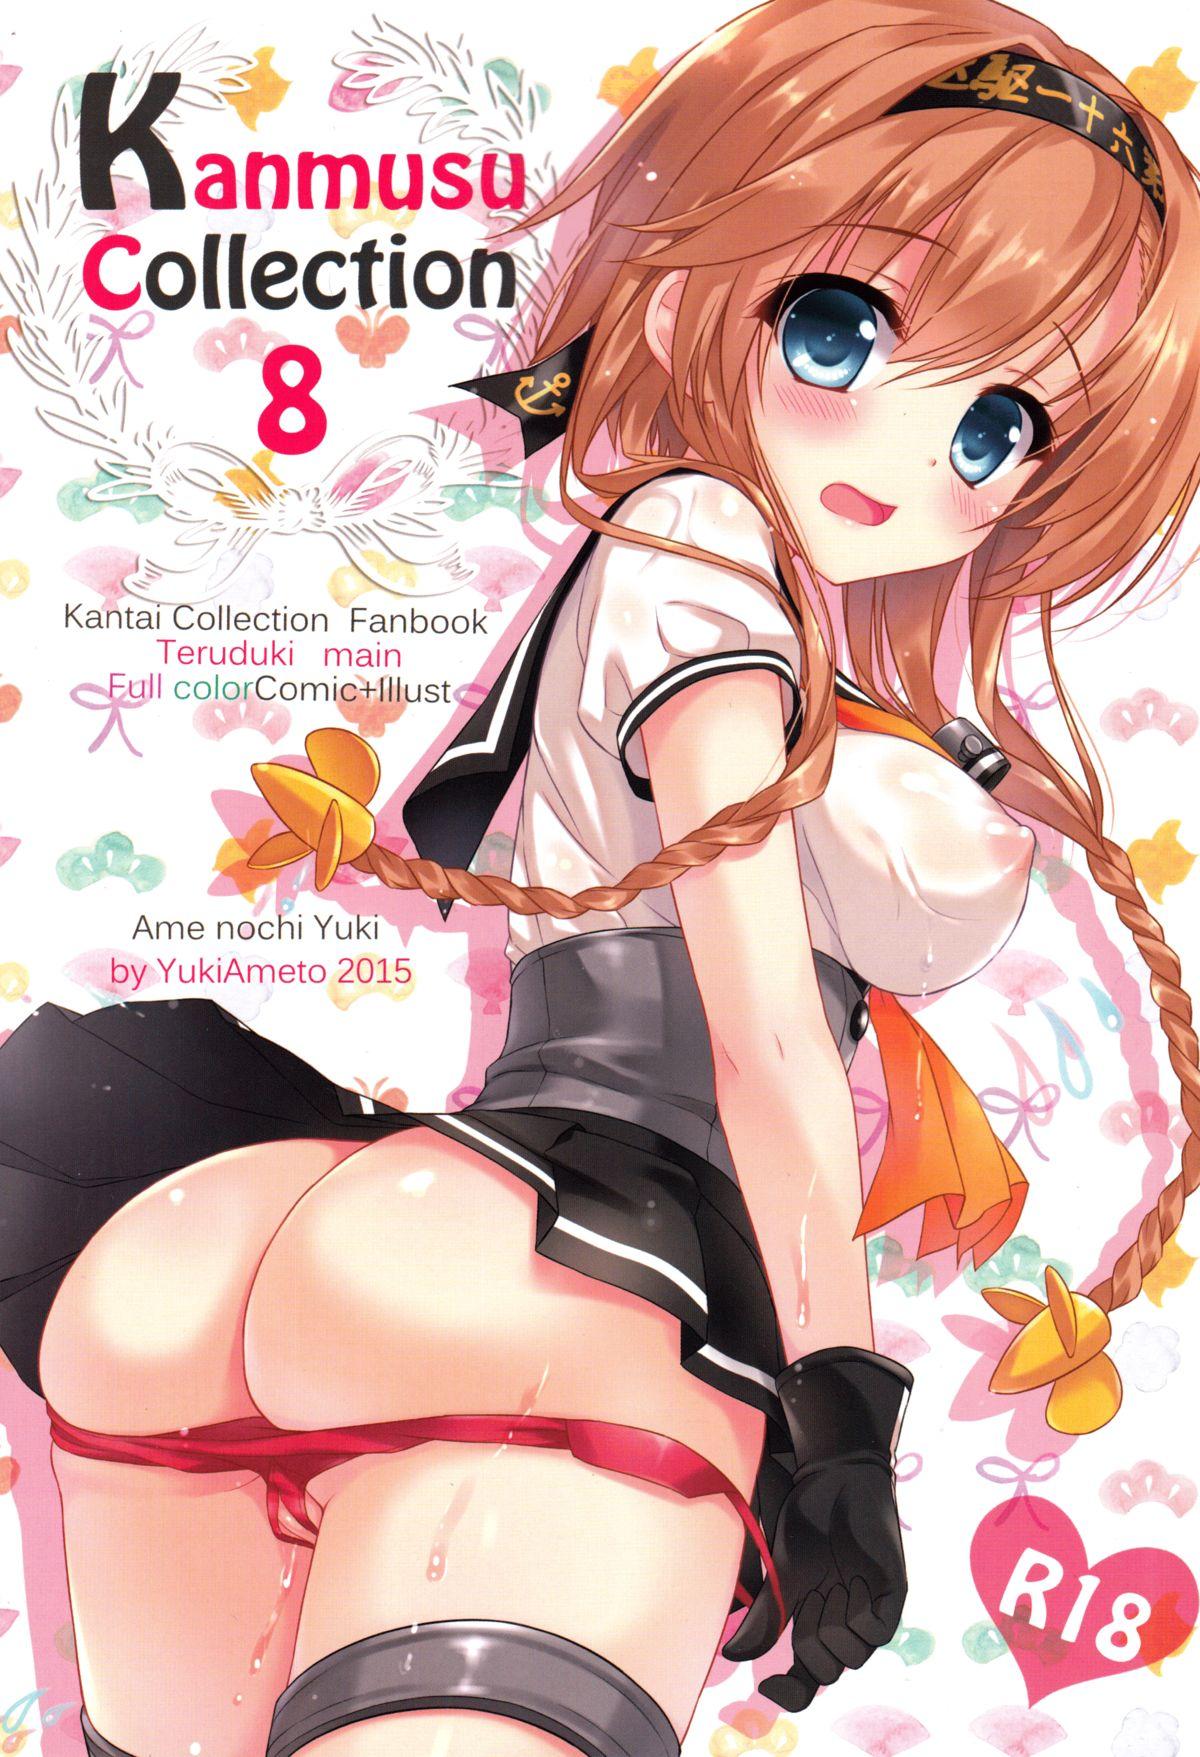 Kanmusu Collection 8 1